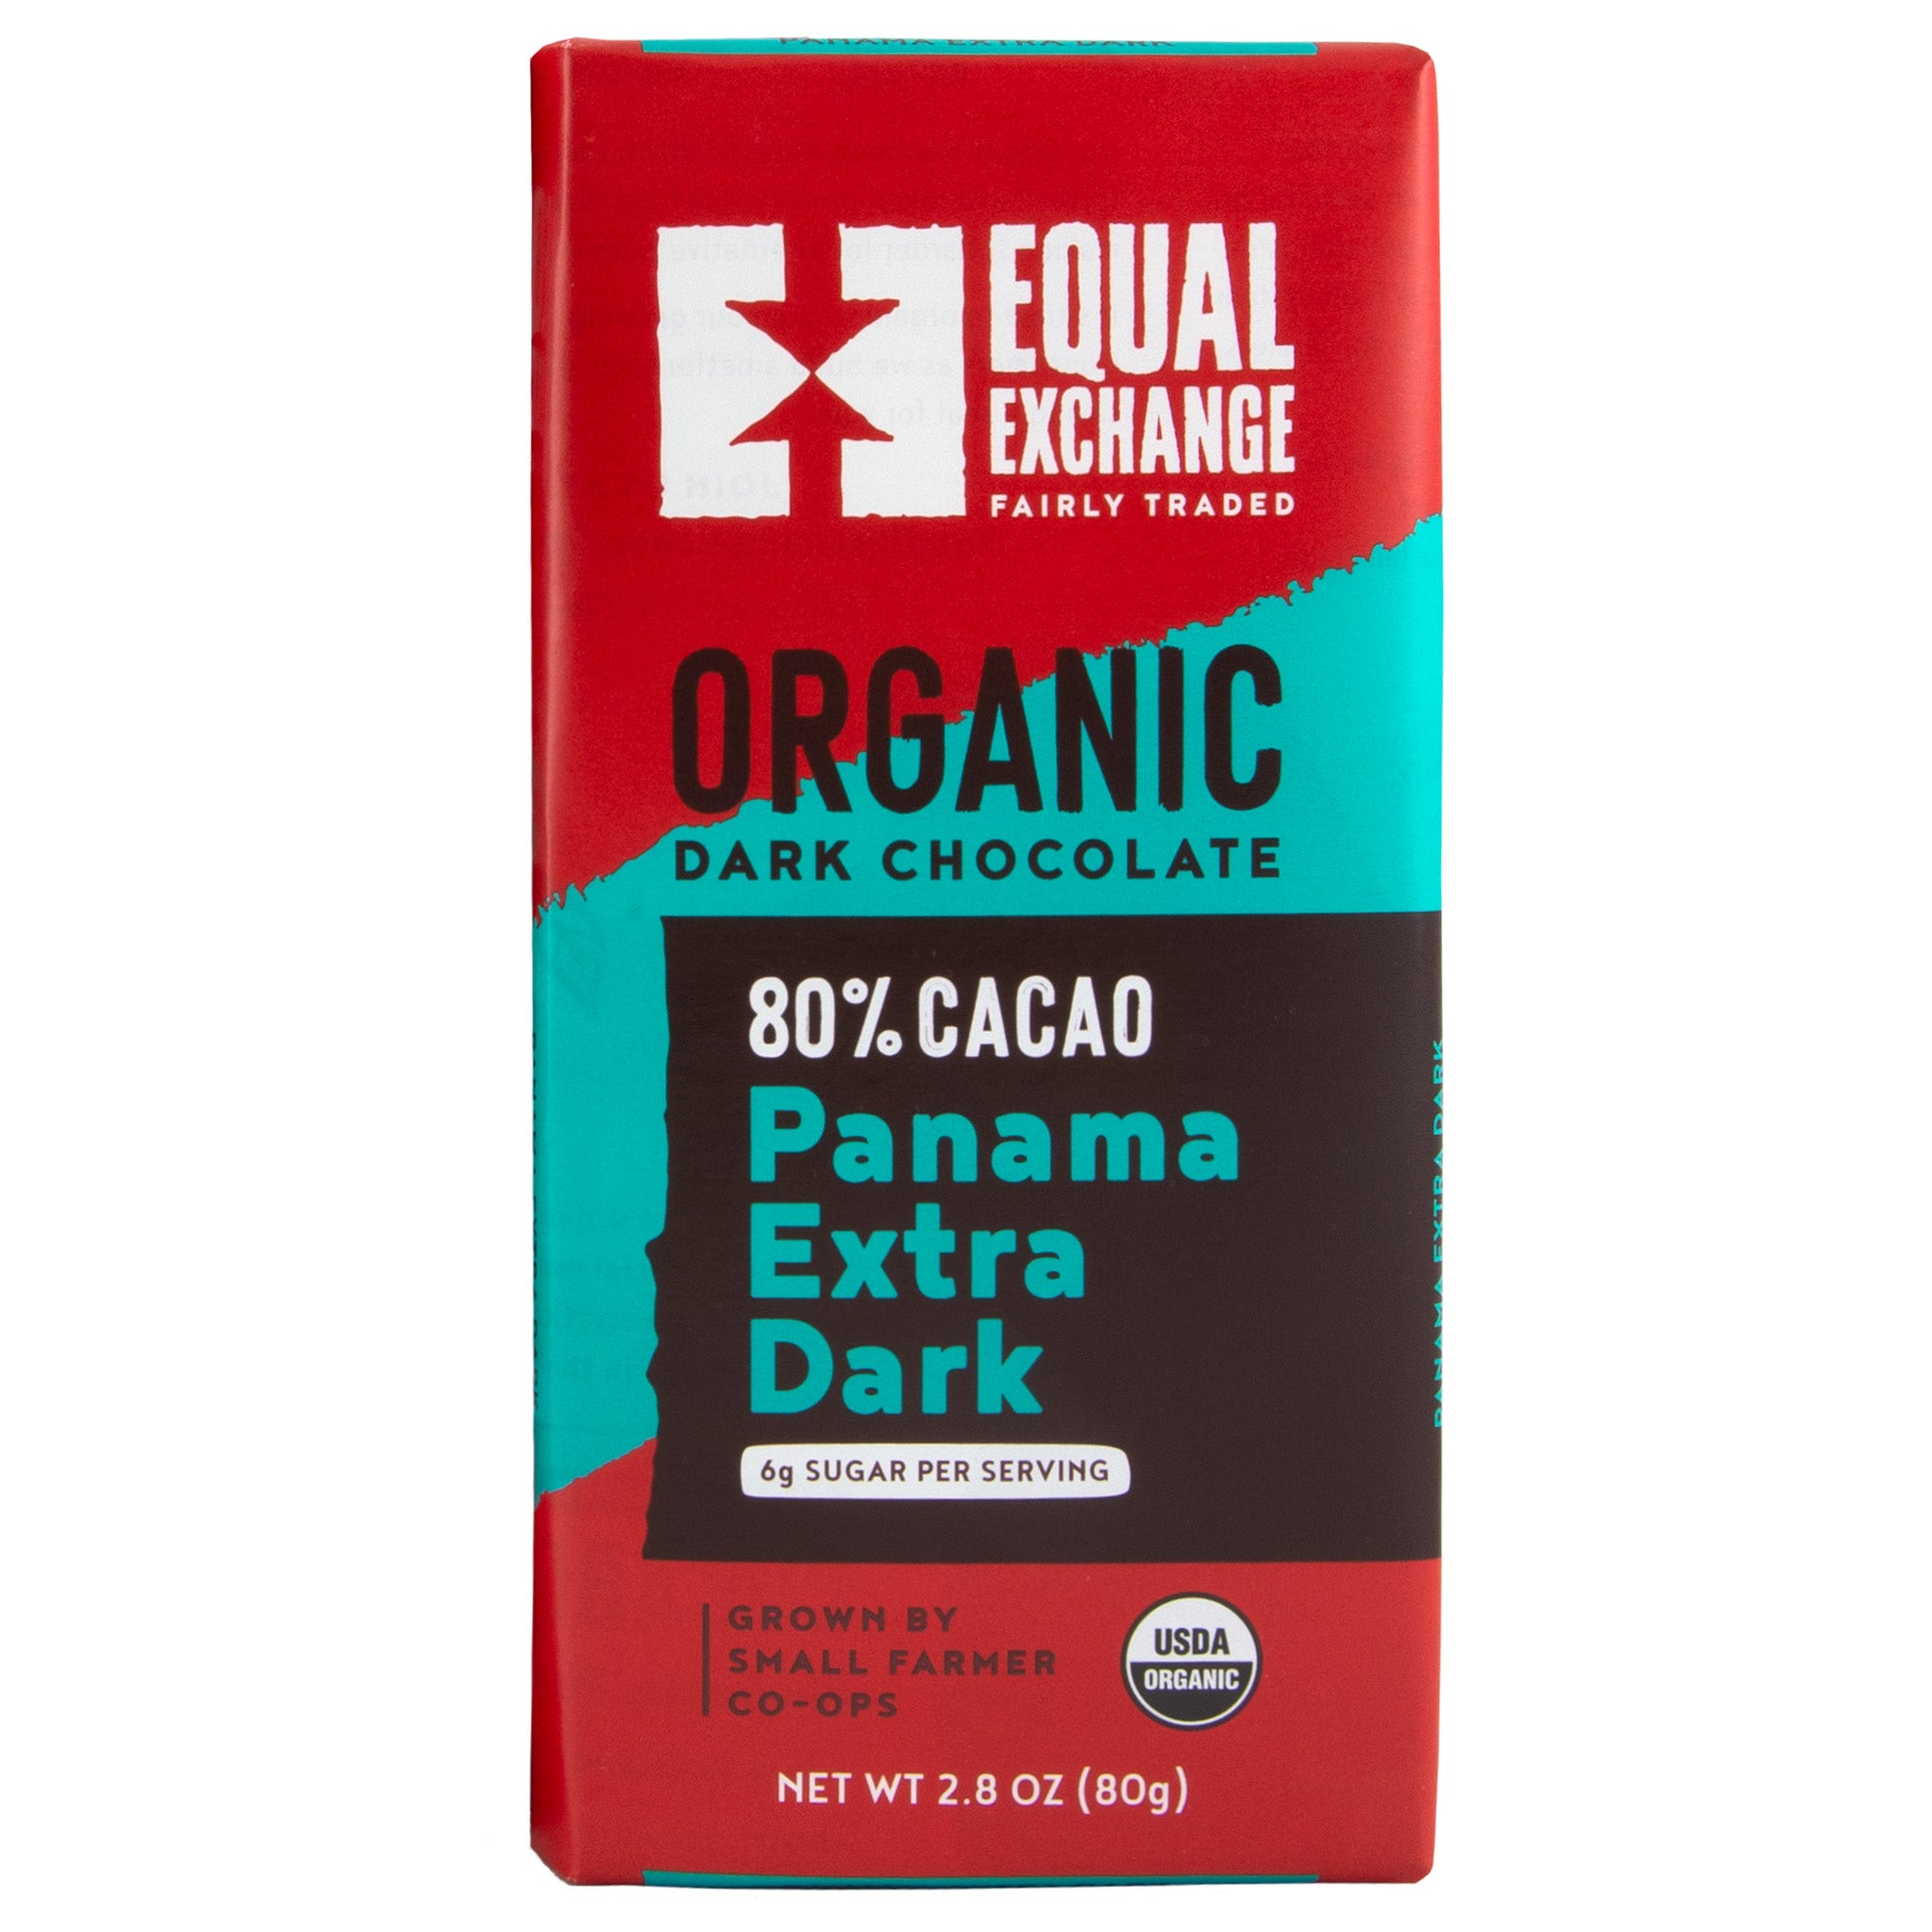 Panama Extra Dark Organic Chocolate - Equal Exchange - 2.8 oz